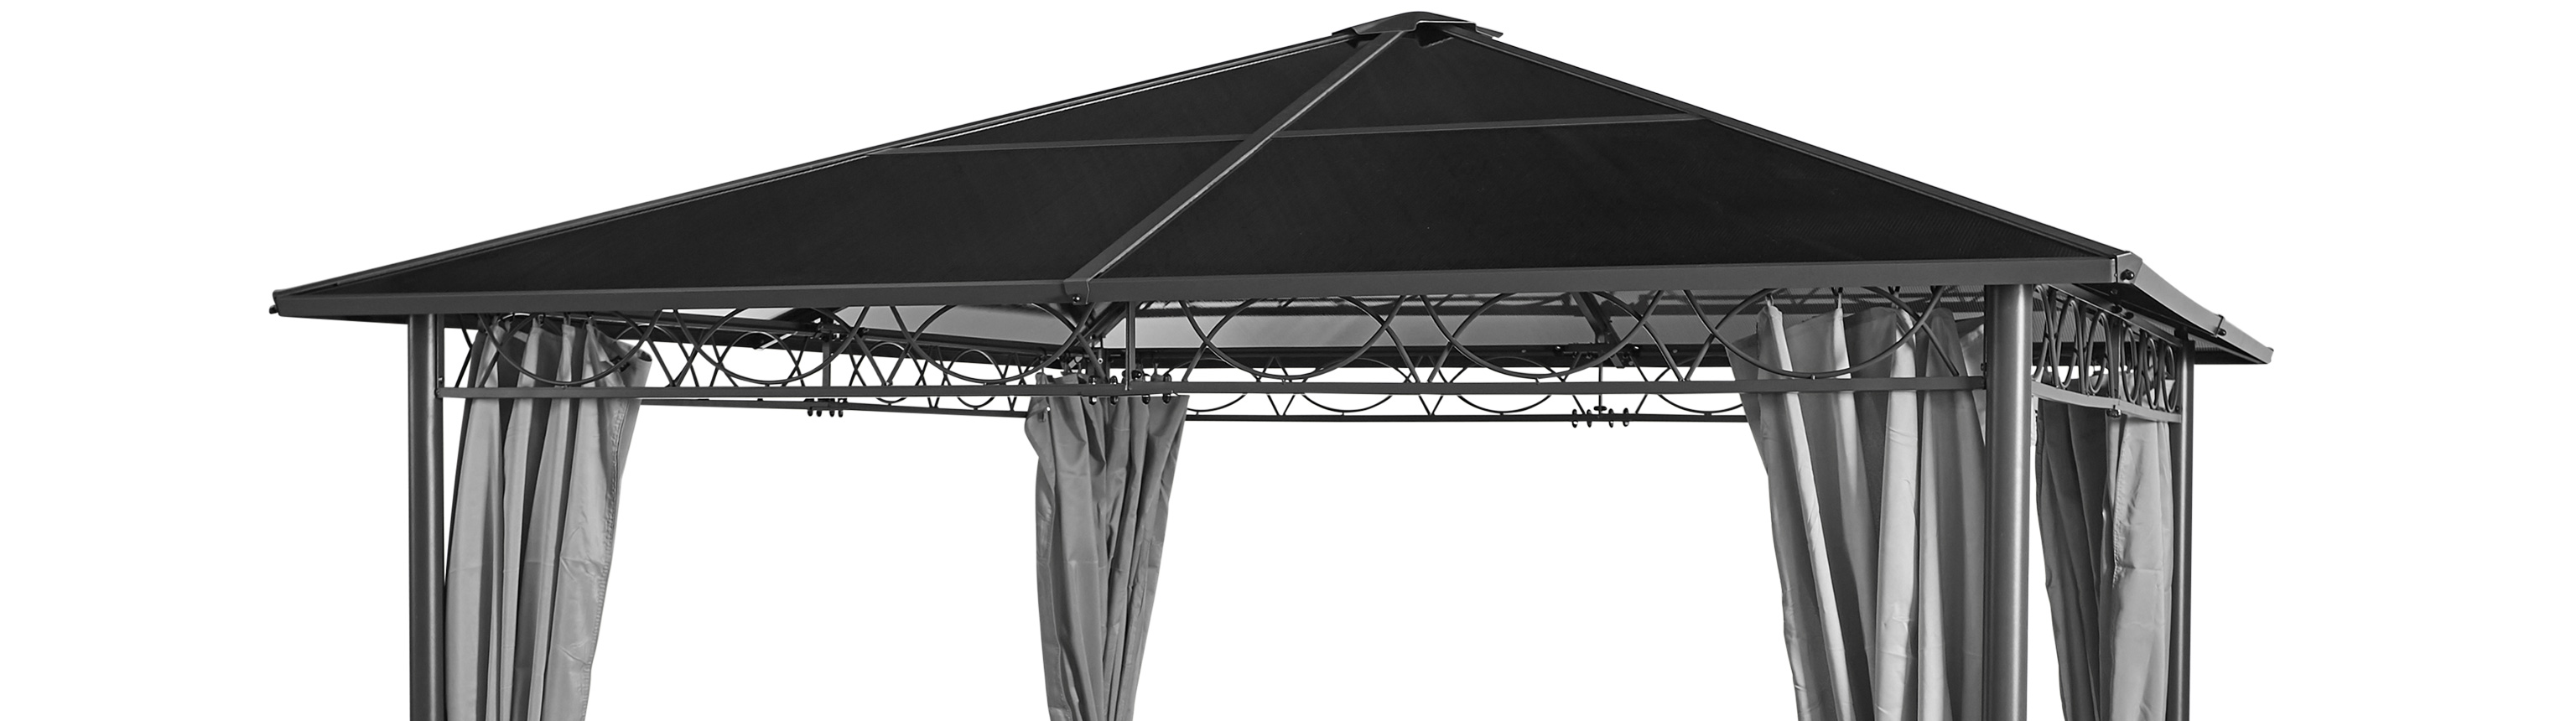 Polycarbonat-Dachabdeckung des Madera-Pavillons, 3 x 3 m, grau